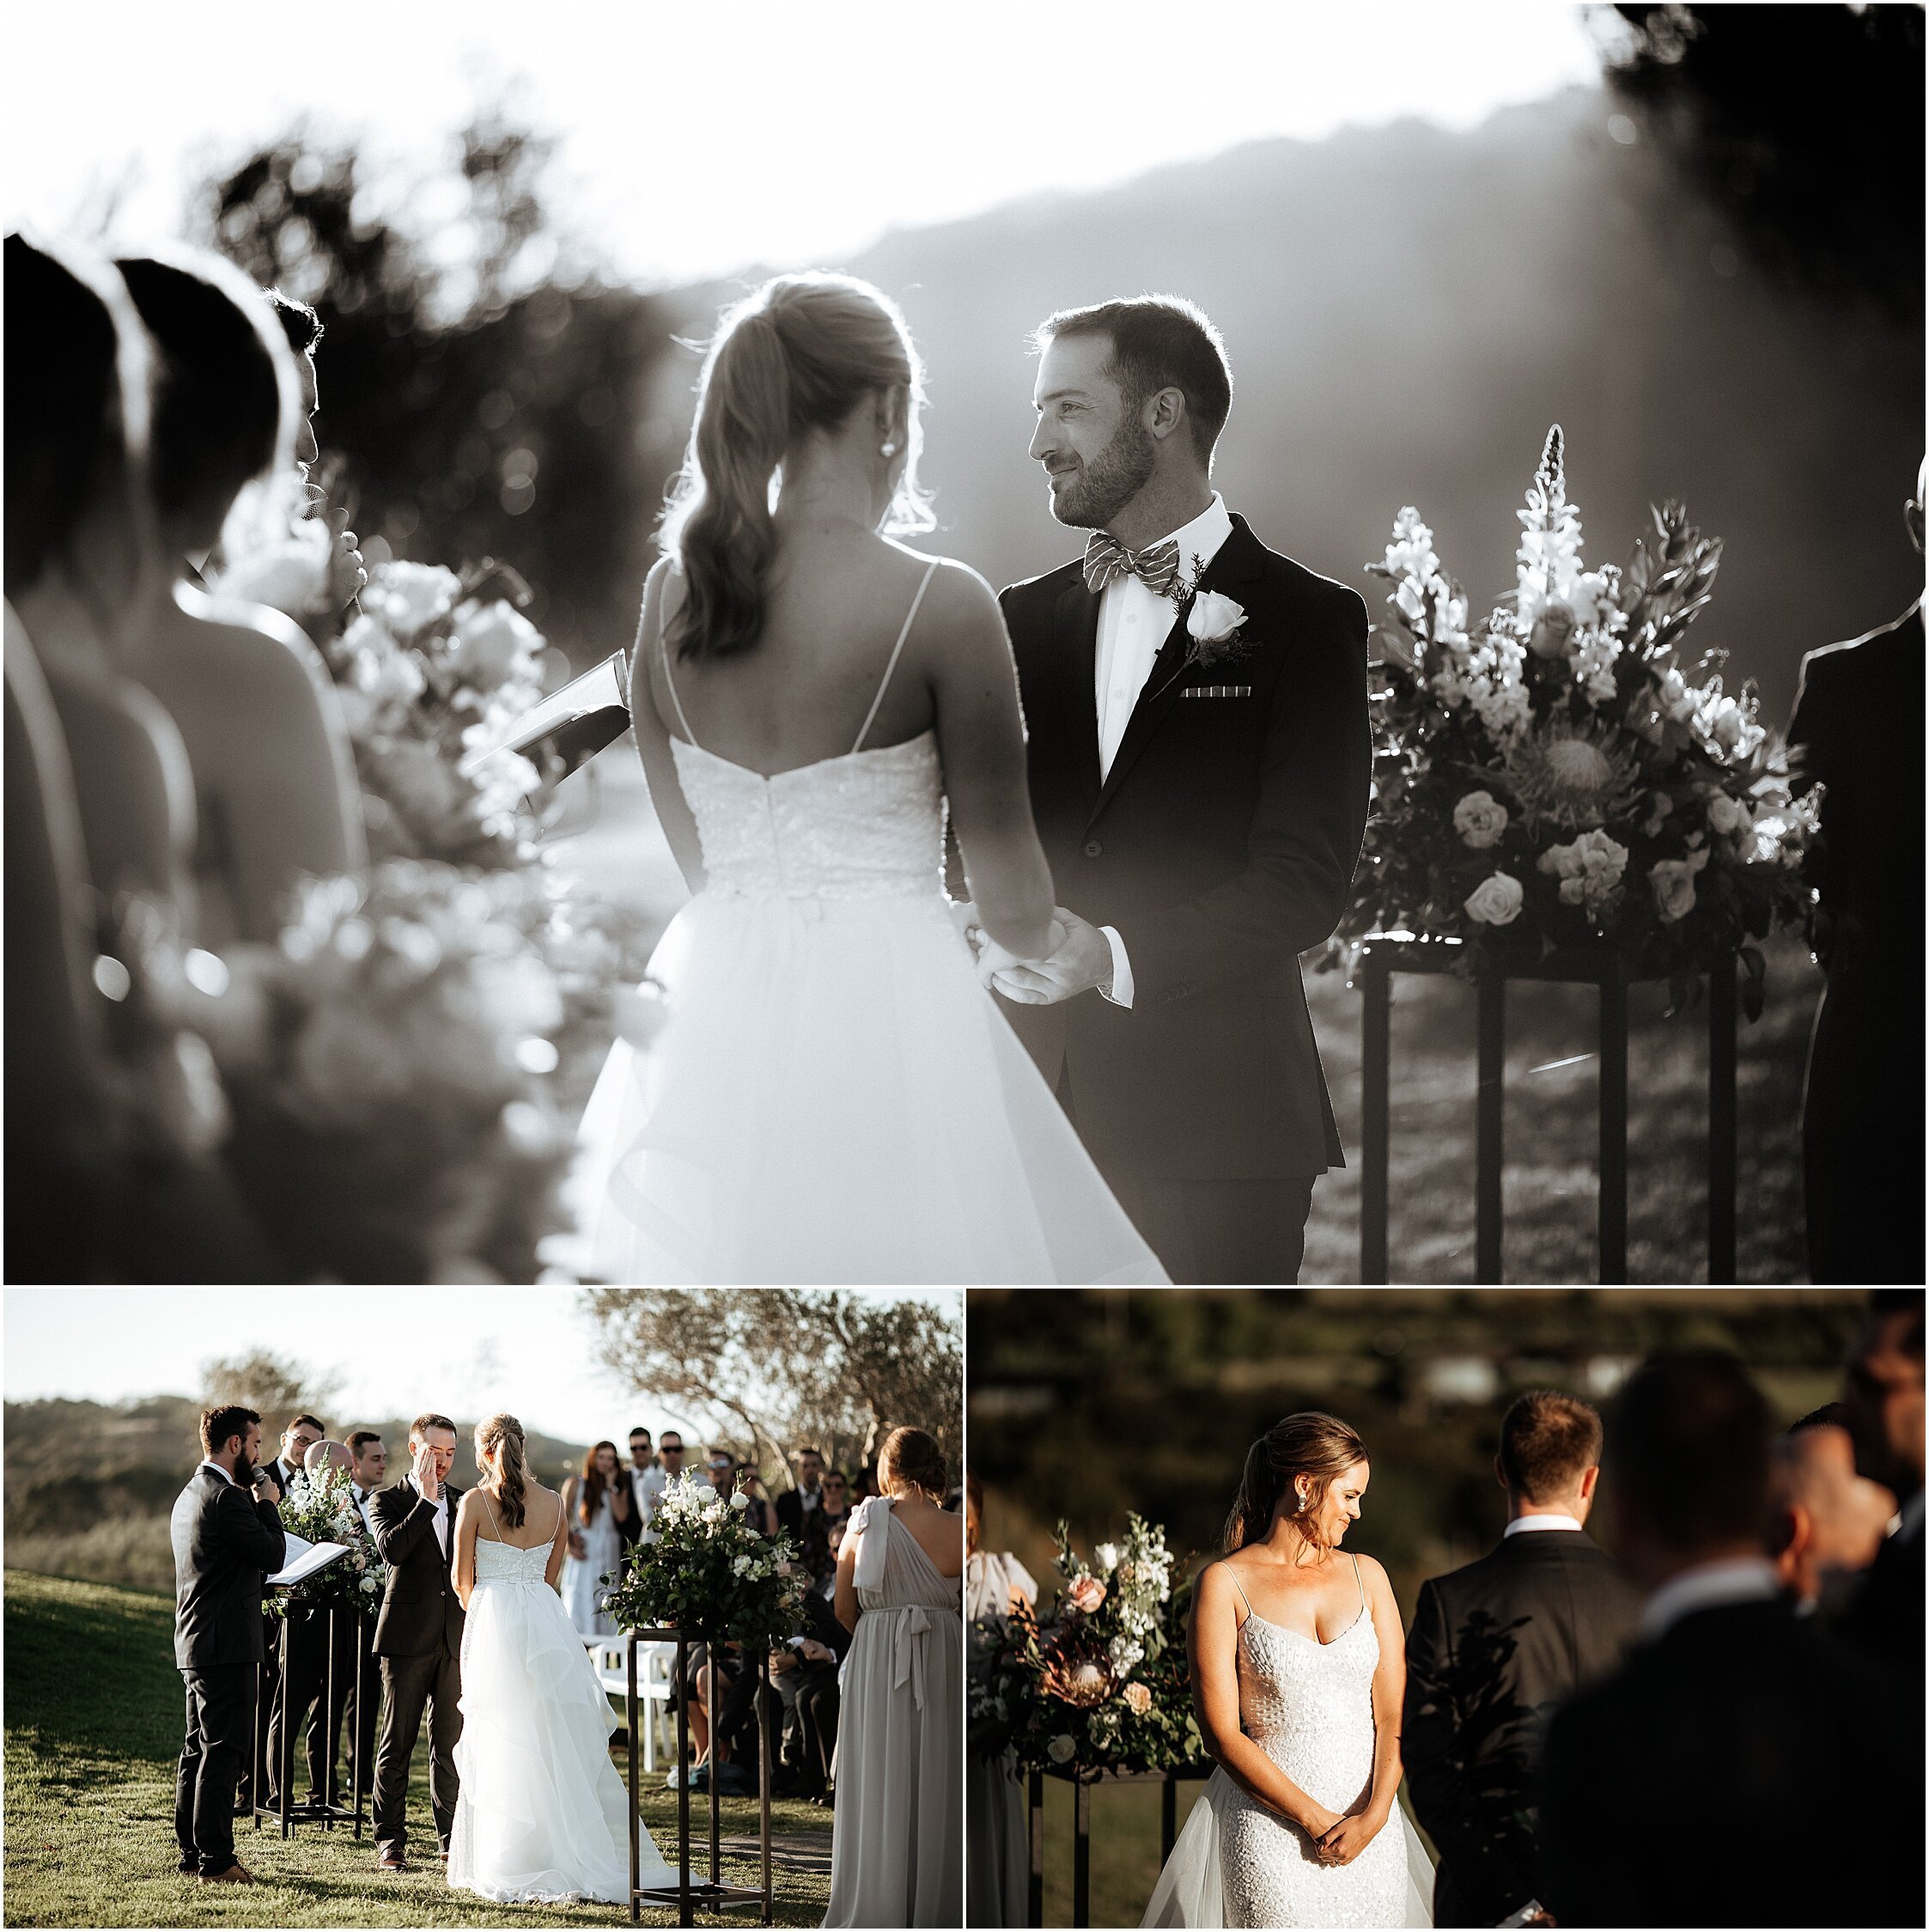 Zanda+Auckland+wedding+photographer+chic+vibrant+Cable+Bay+vineyard+venue+Waiheke+Island+New+Zealand_38.jpeg